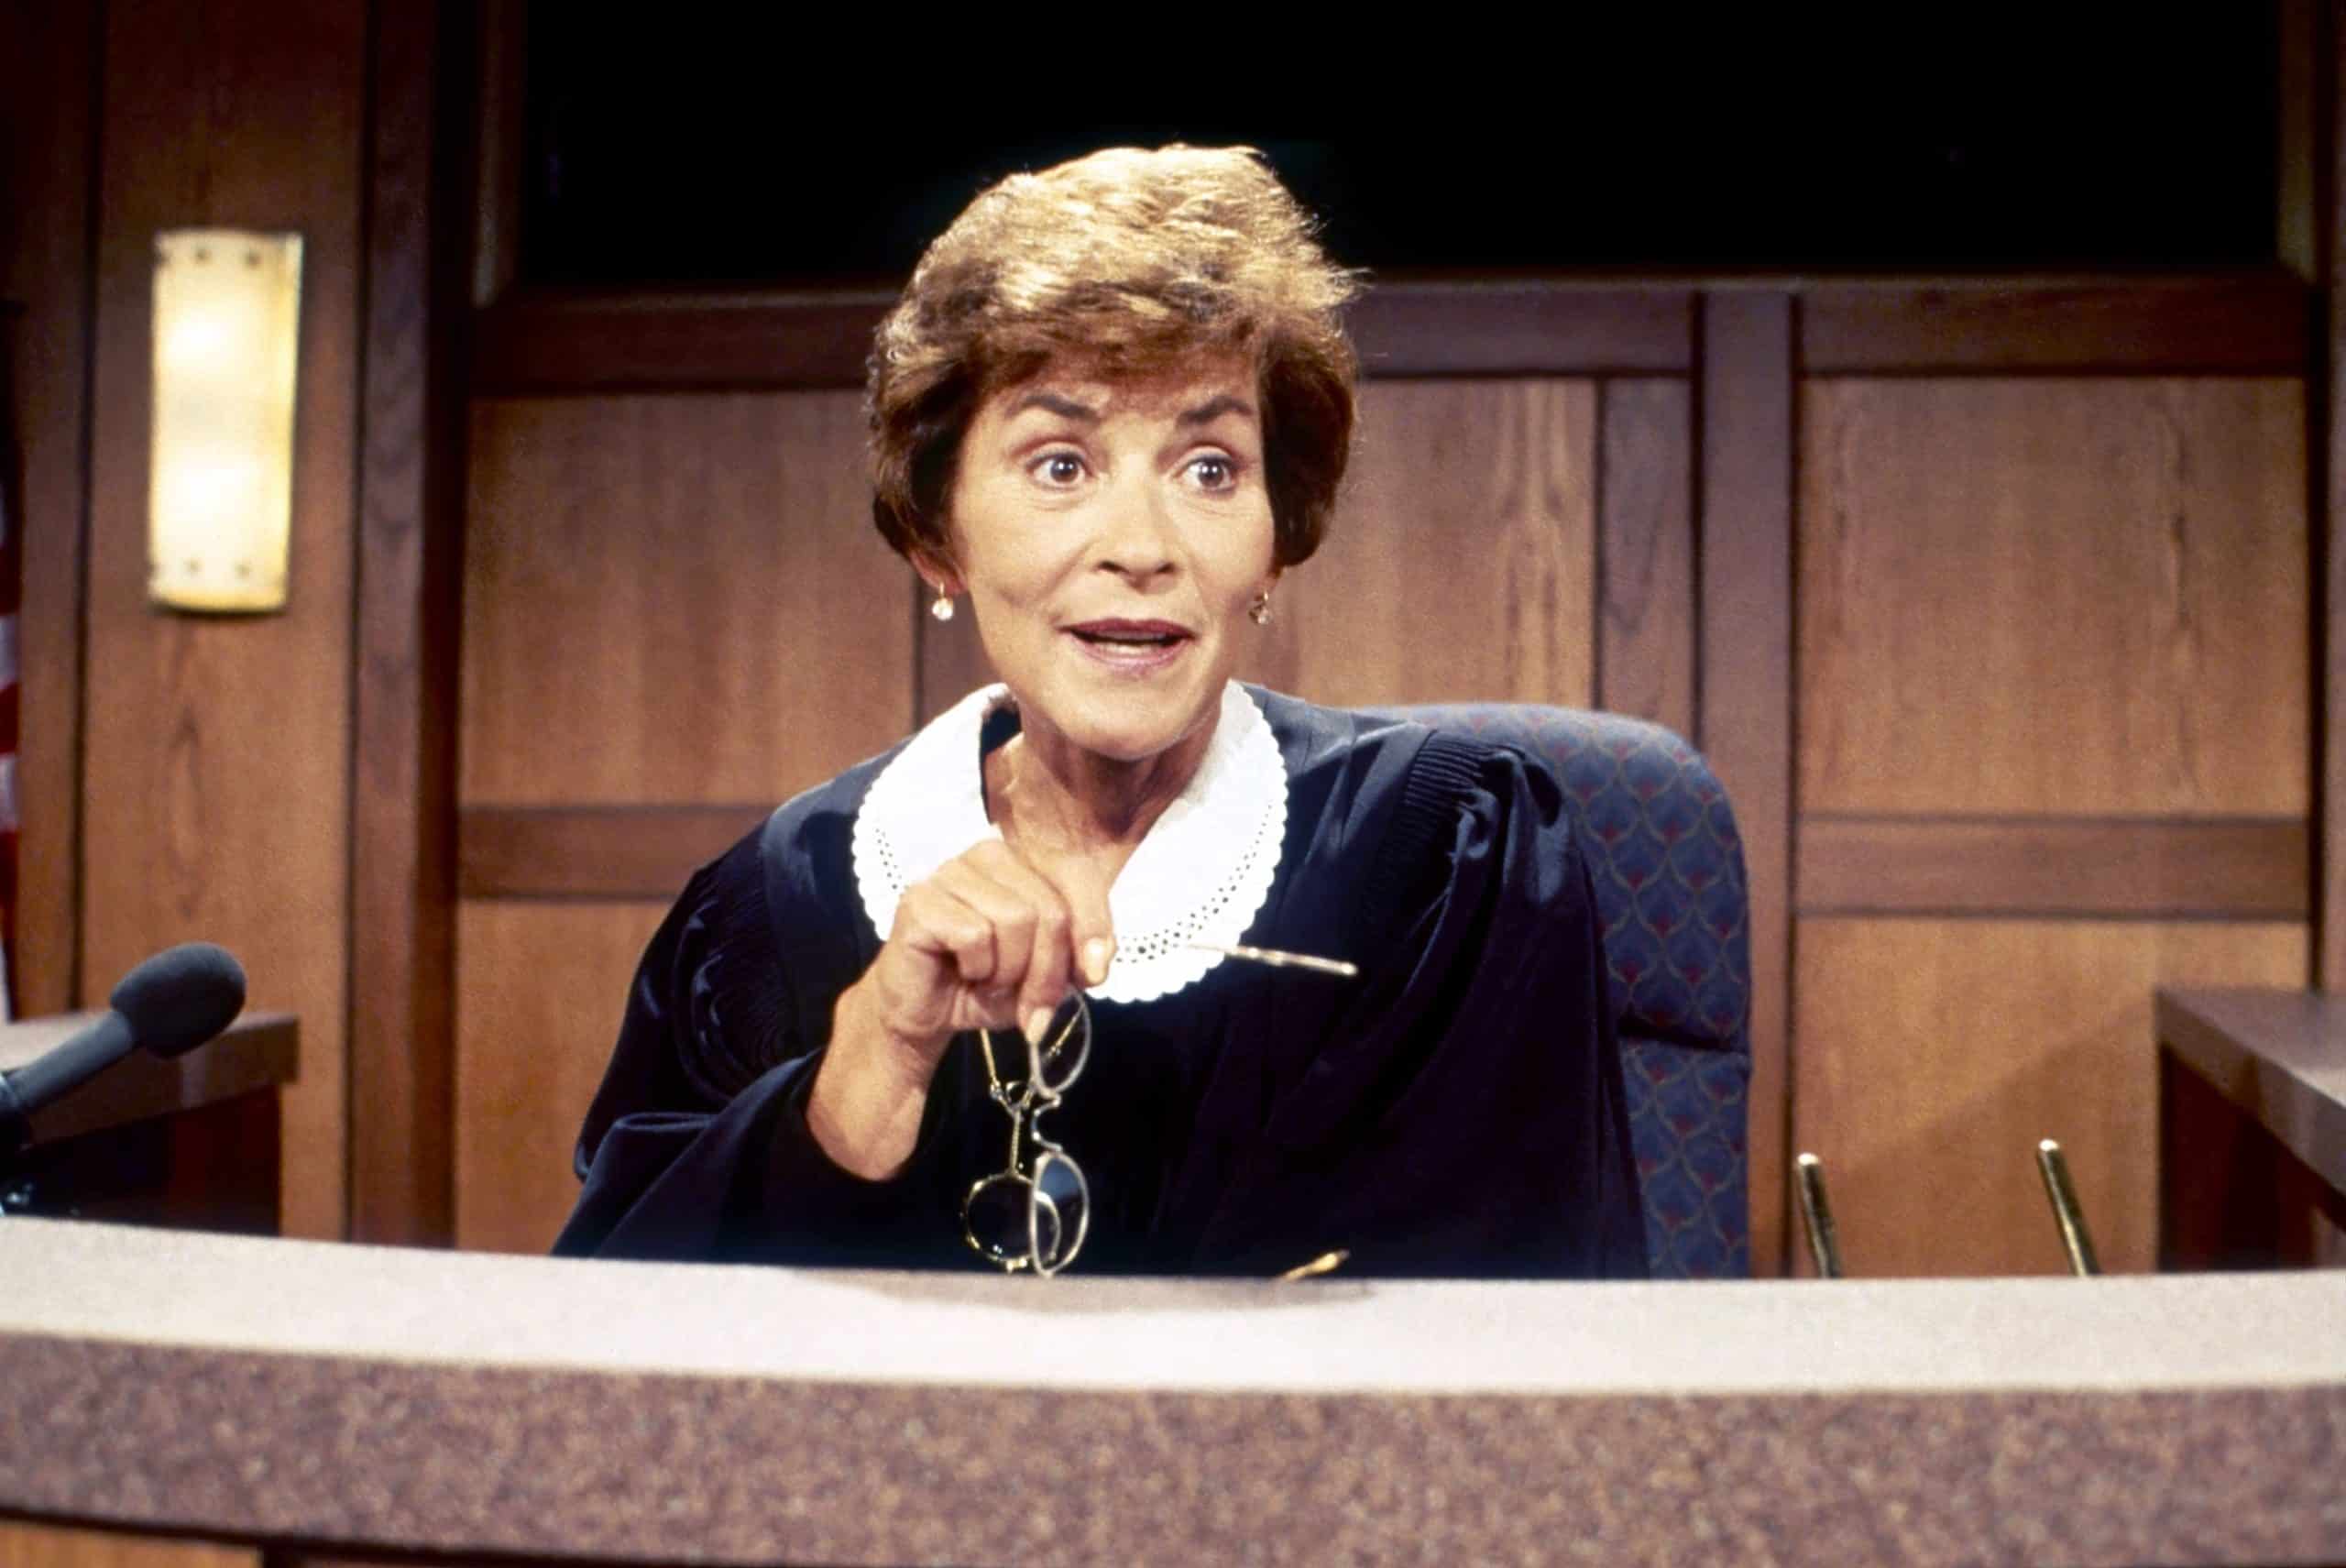 JUDGE JUDY, Judge Judy Sheindlin, 1996- 2021